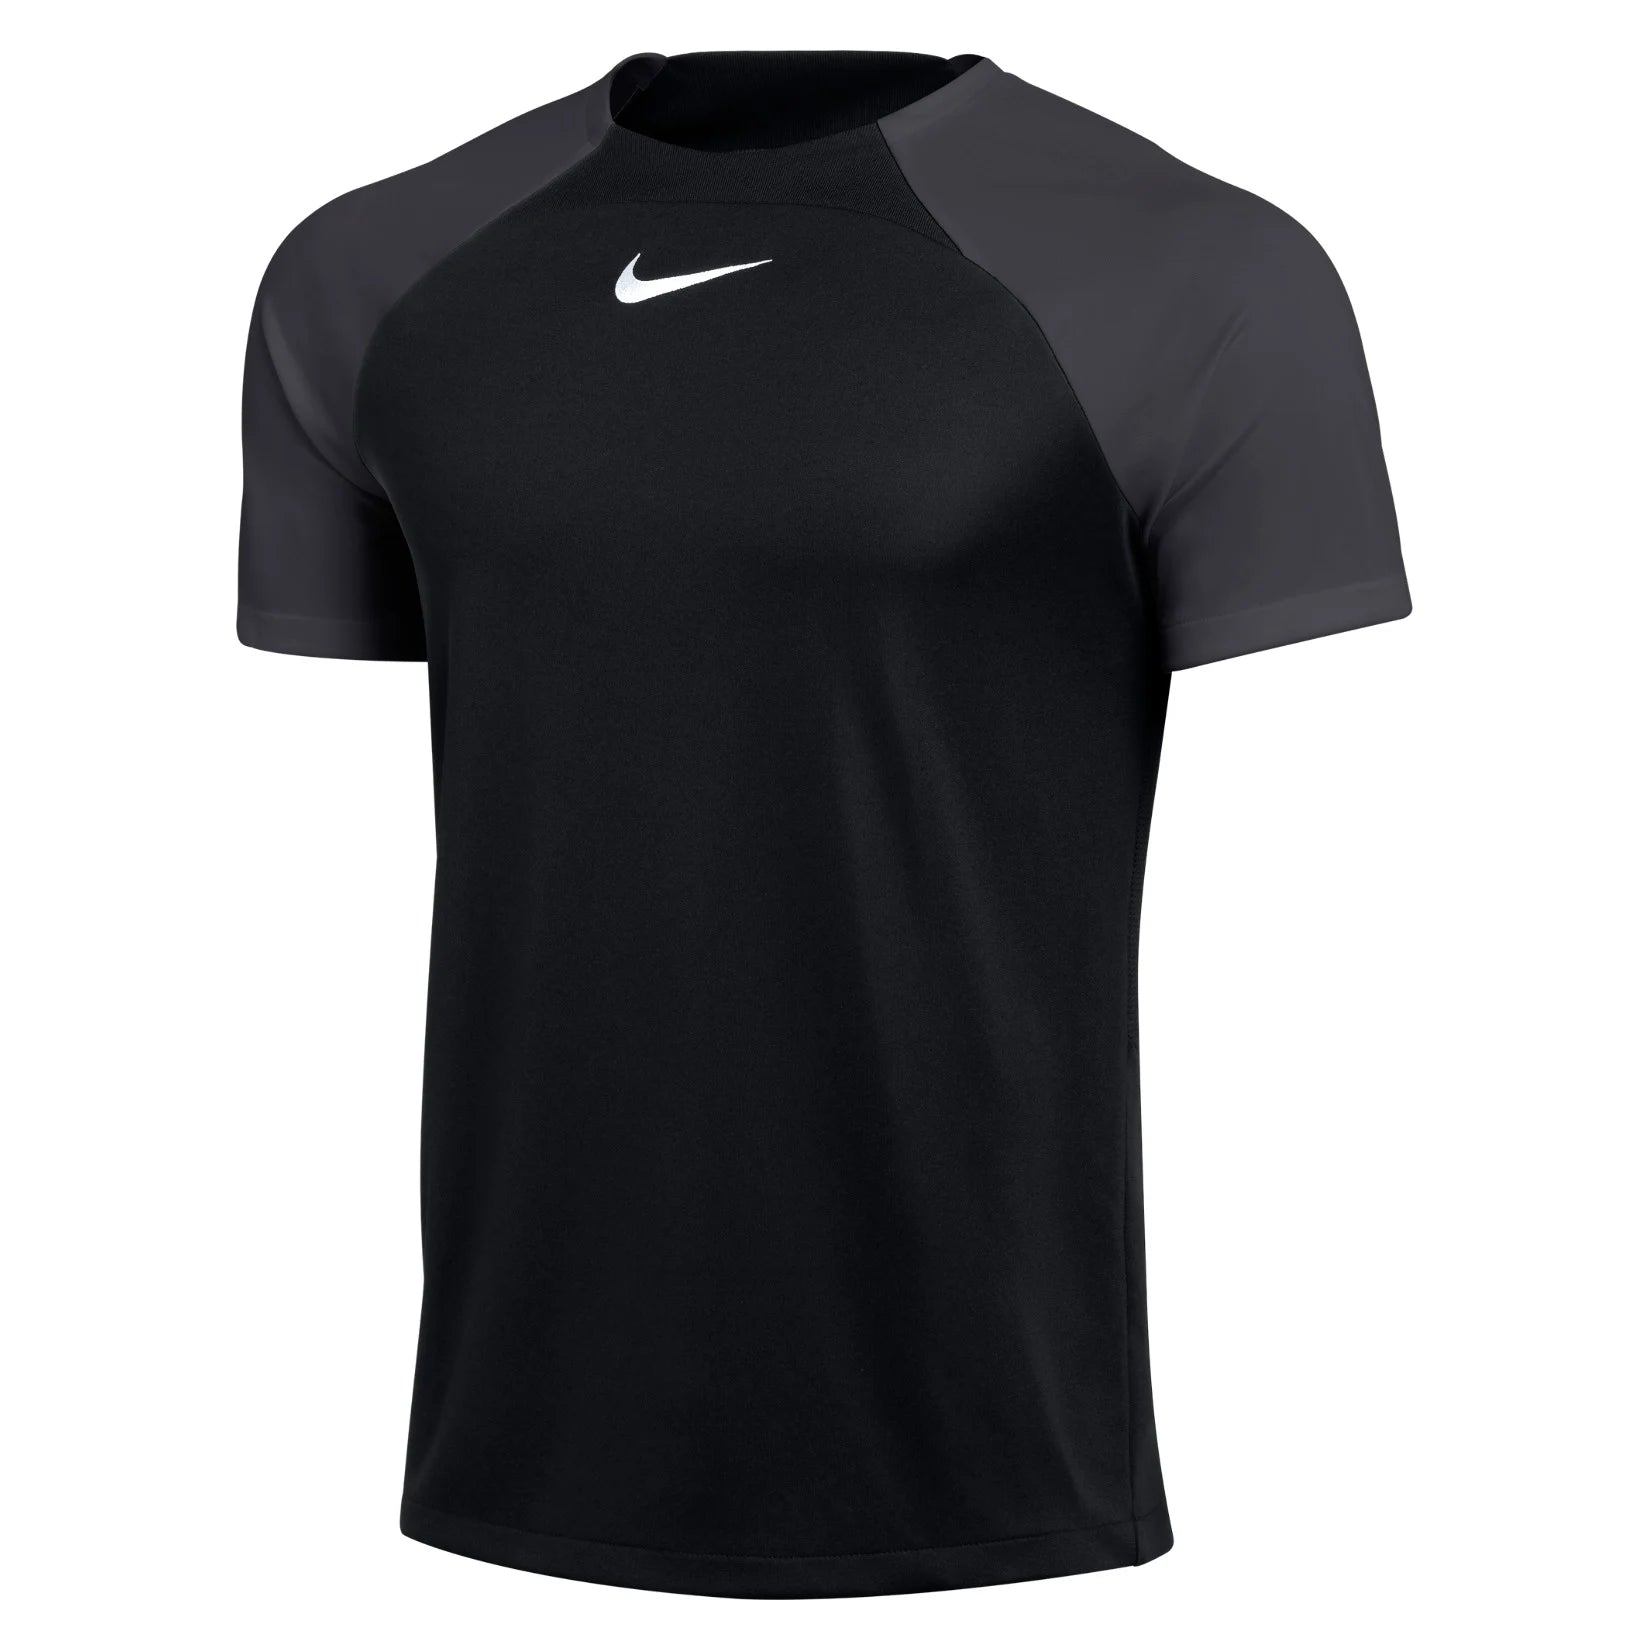 2023/24 Nike Referee Training Shirt - A&H International